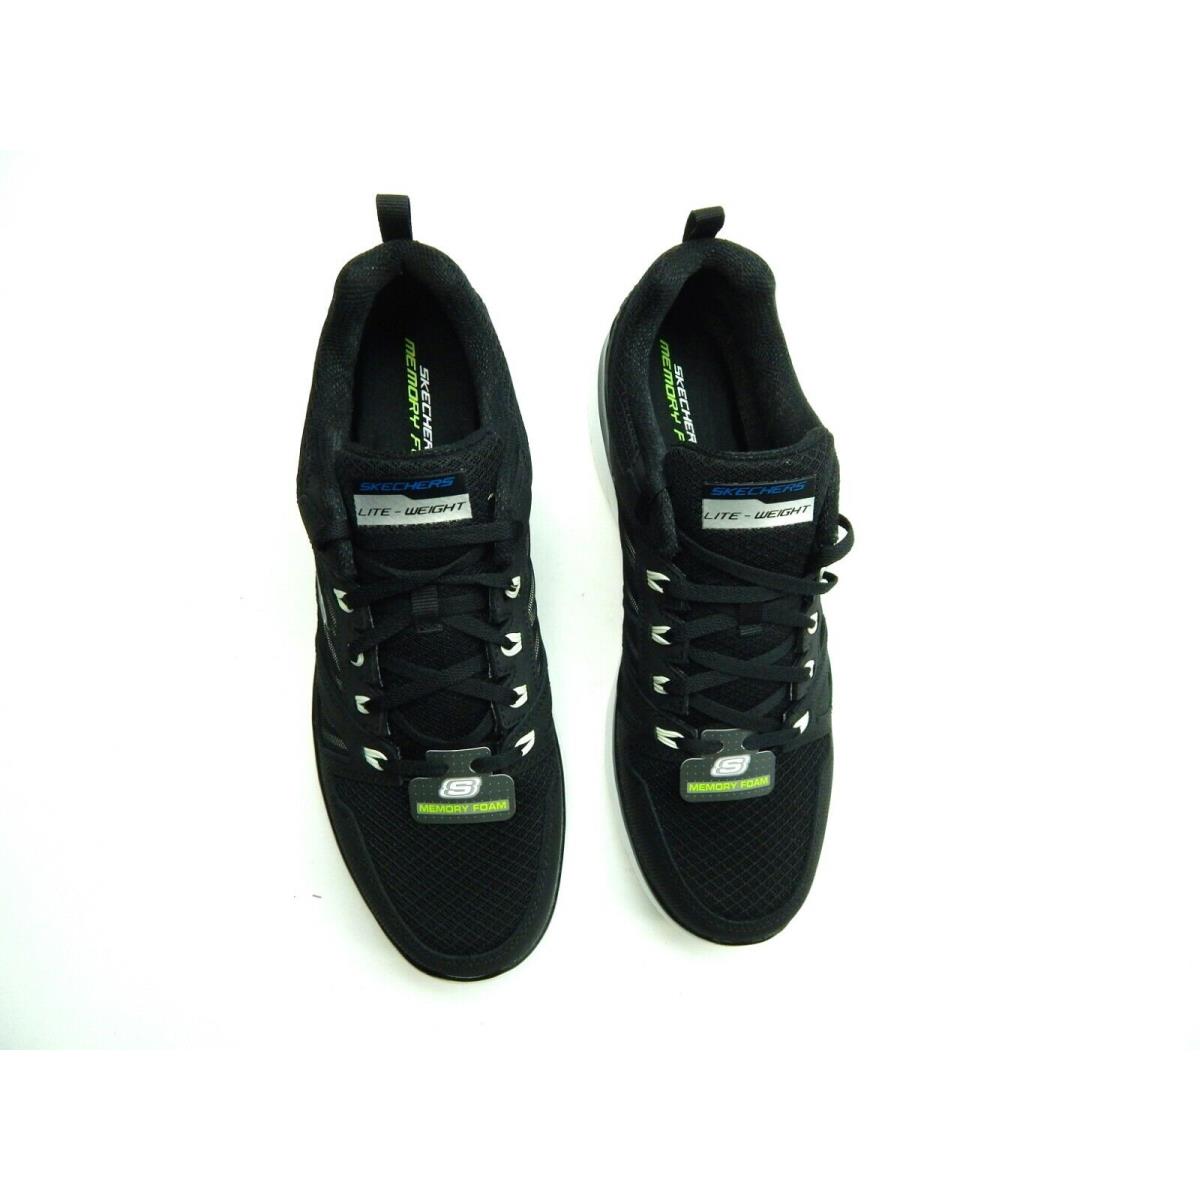 Skechers shoes SUMMITS - Black 8